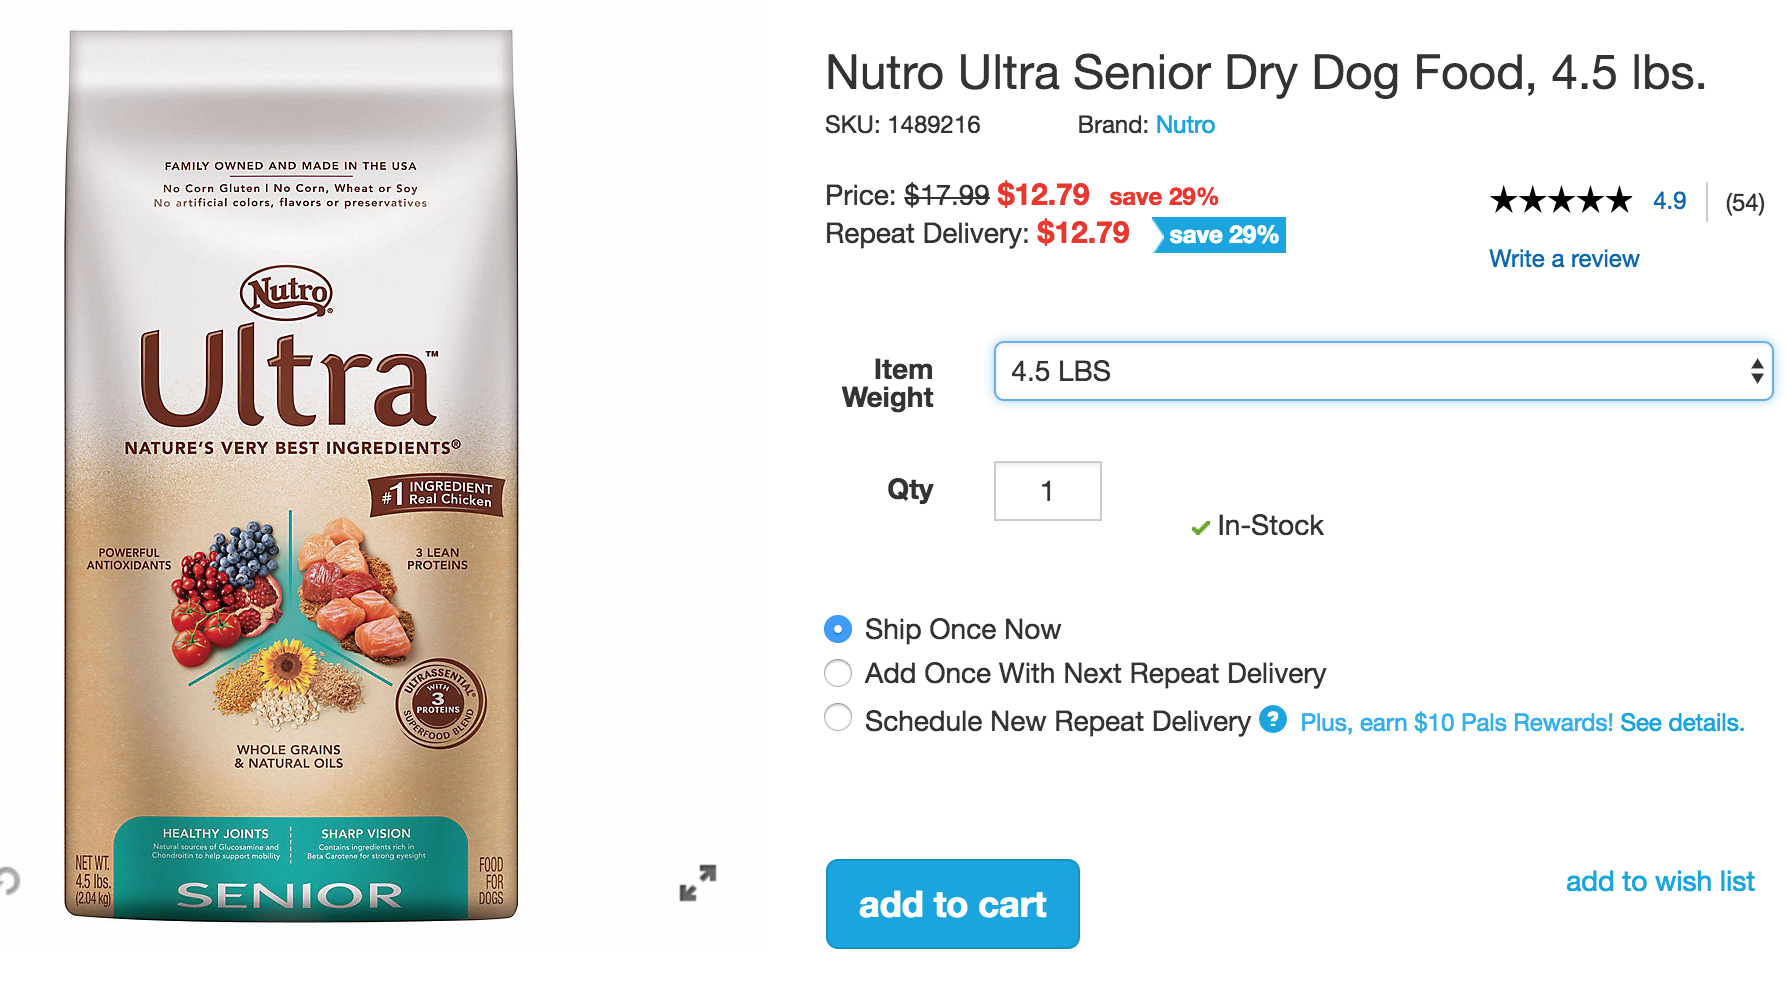 Petco Coupons Nutro Ultra Dog Food